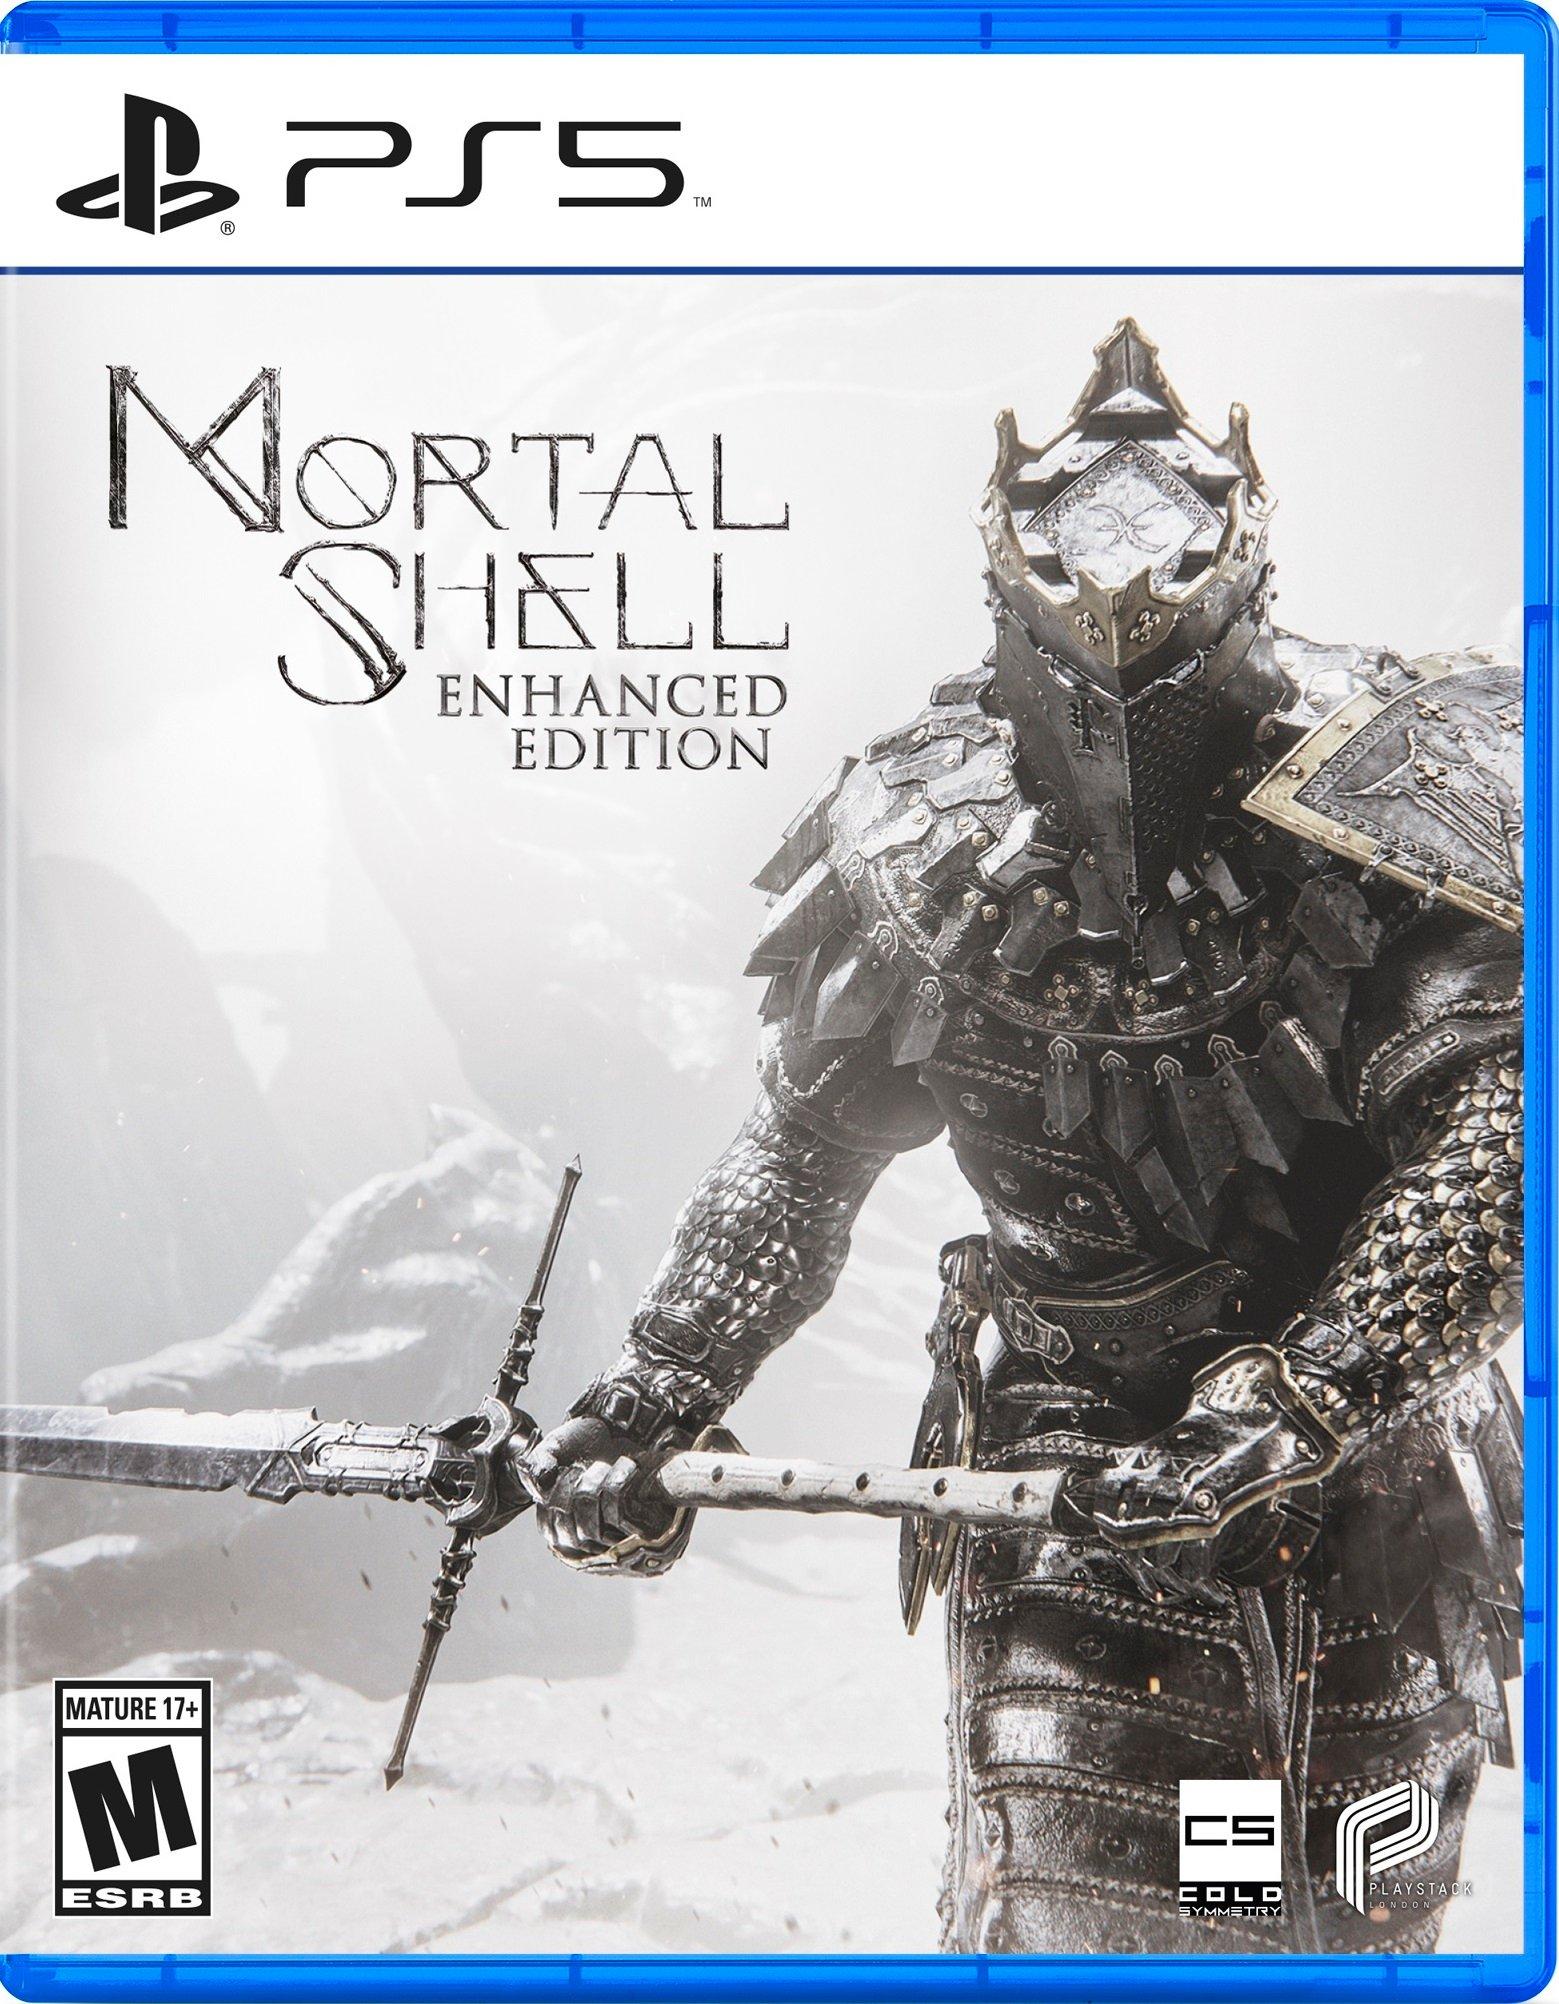 Mortal Shell Enhanced Edition Deluxe Set